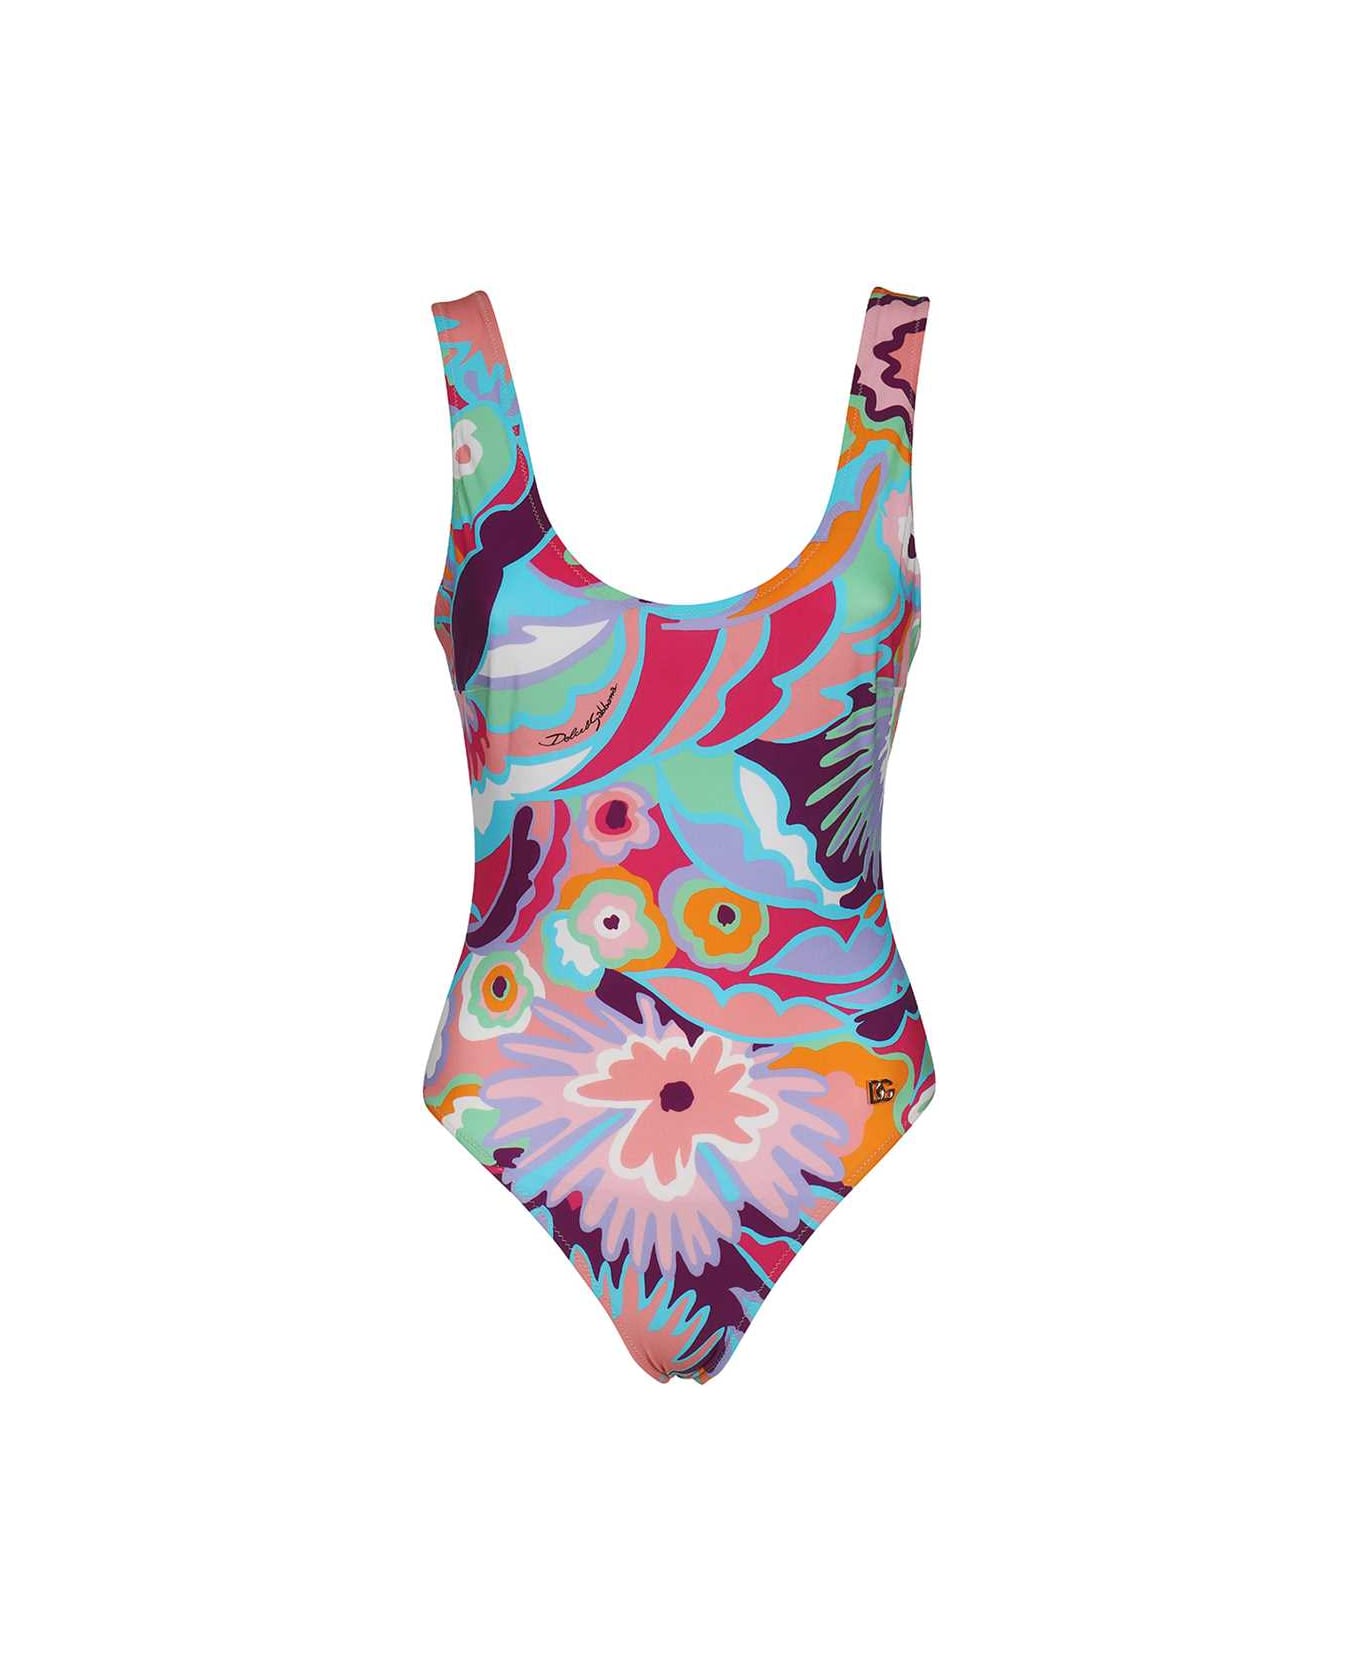 Dolce & Gabbana Printed One-piece Swimsuit - Multicolor 水着